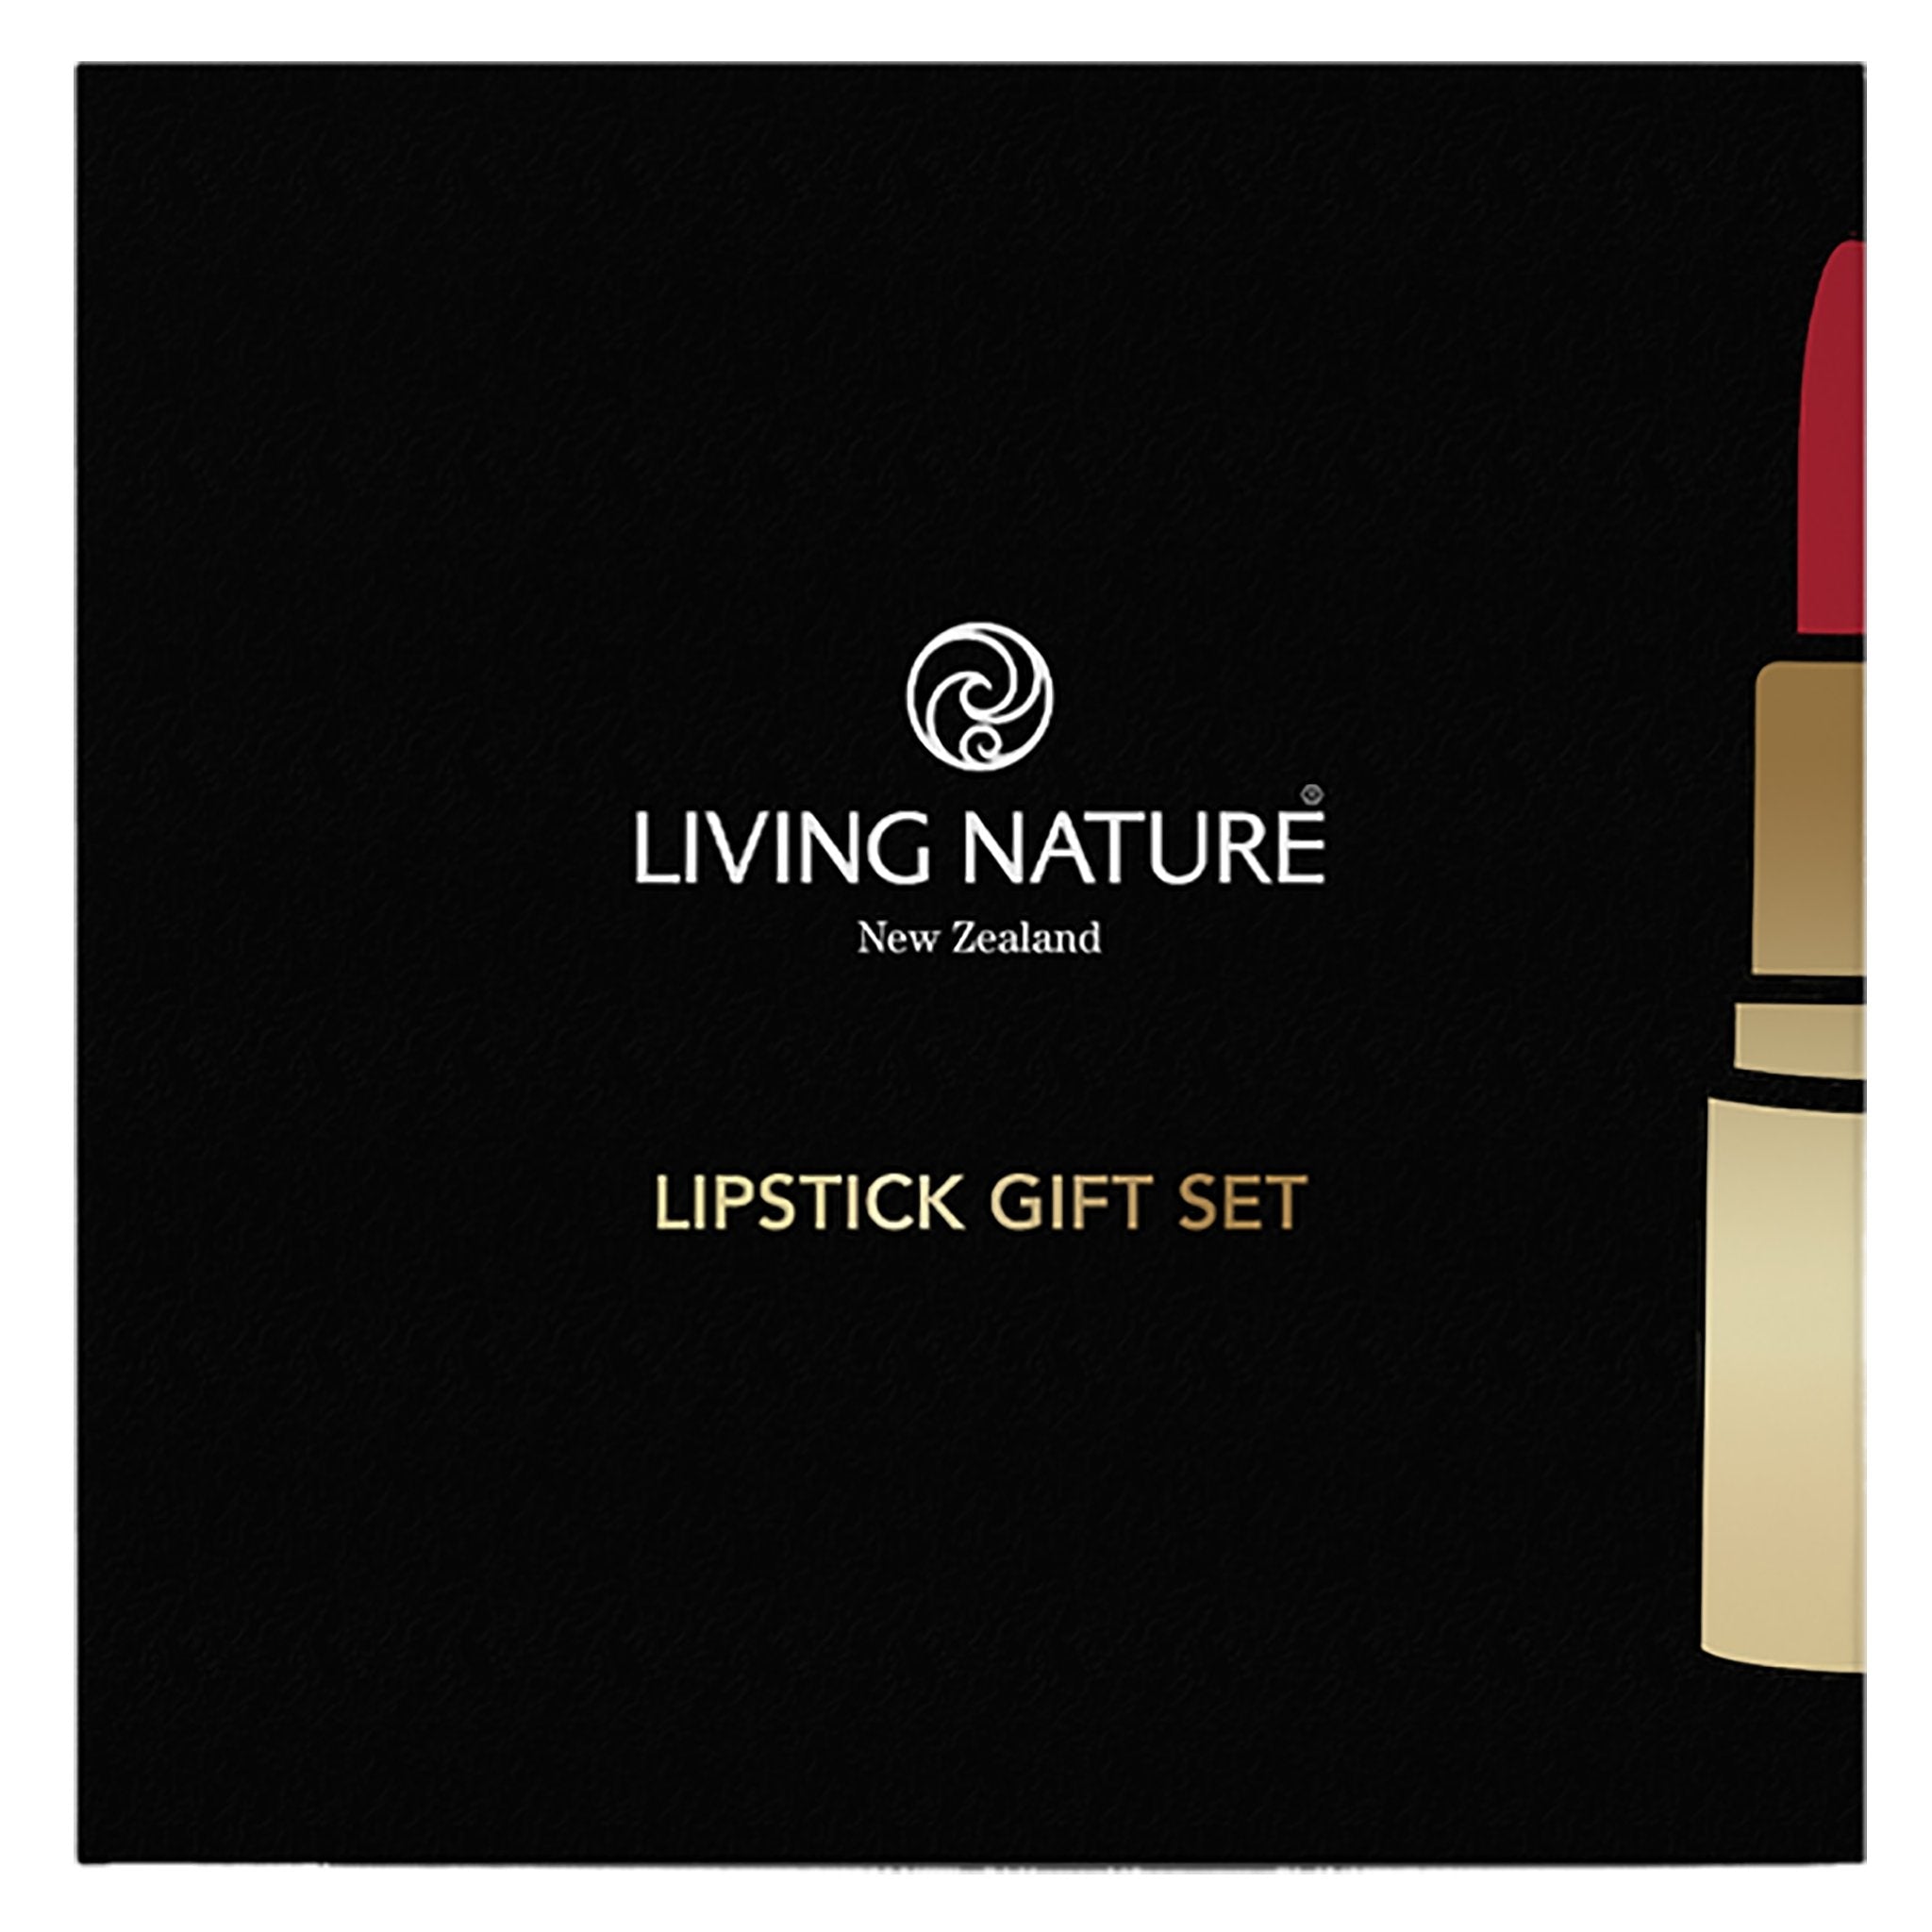 Lipstick Gift Set - Worth £60